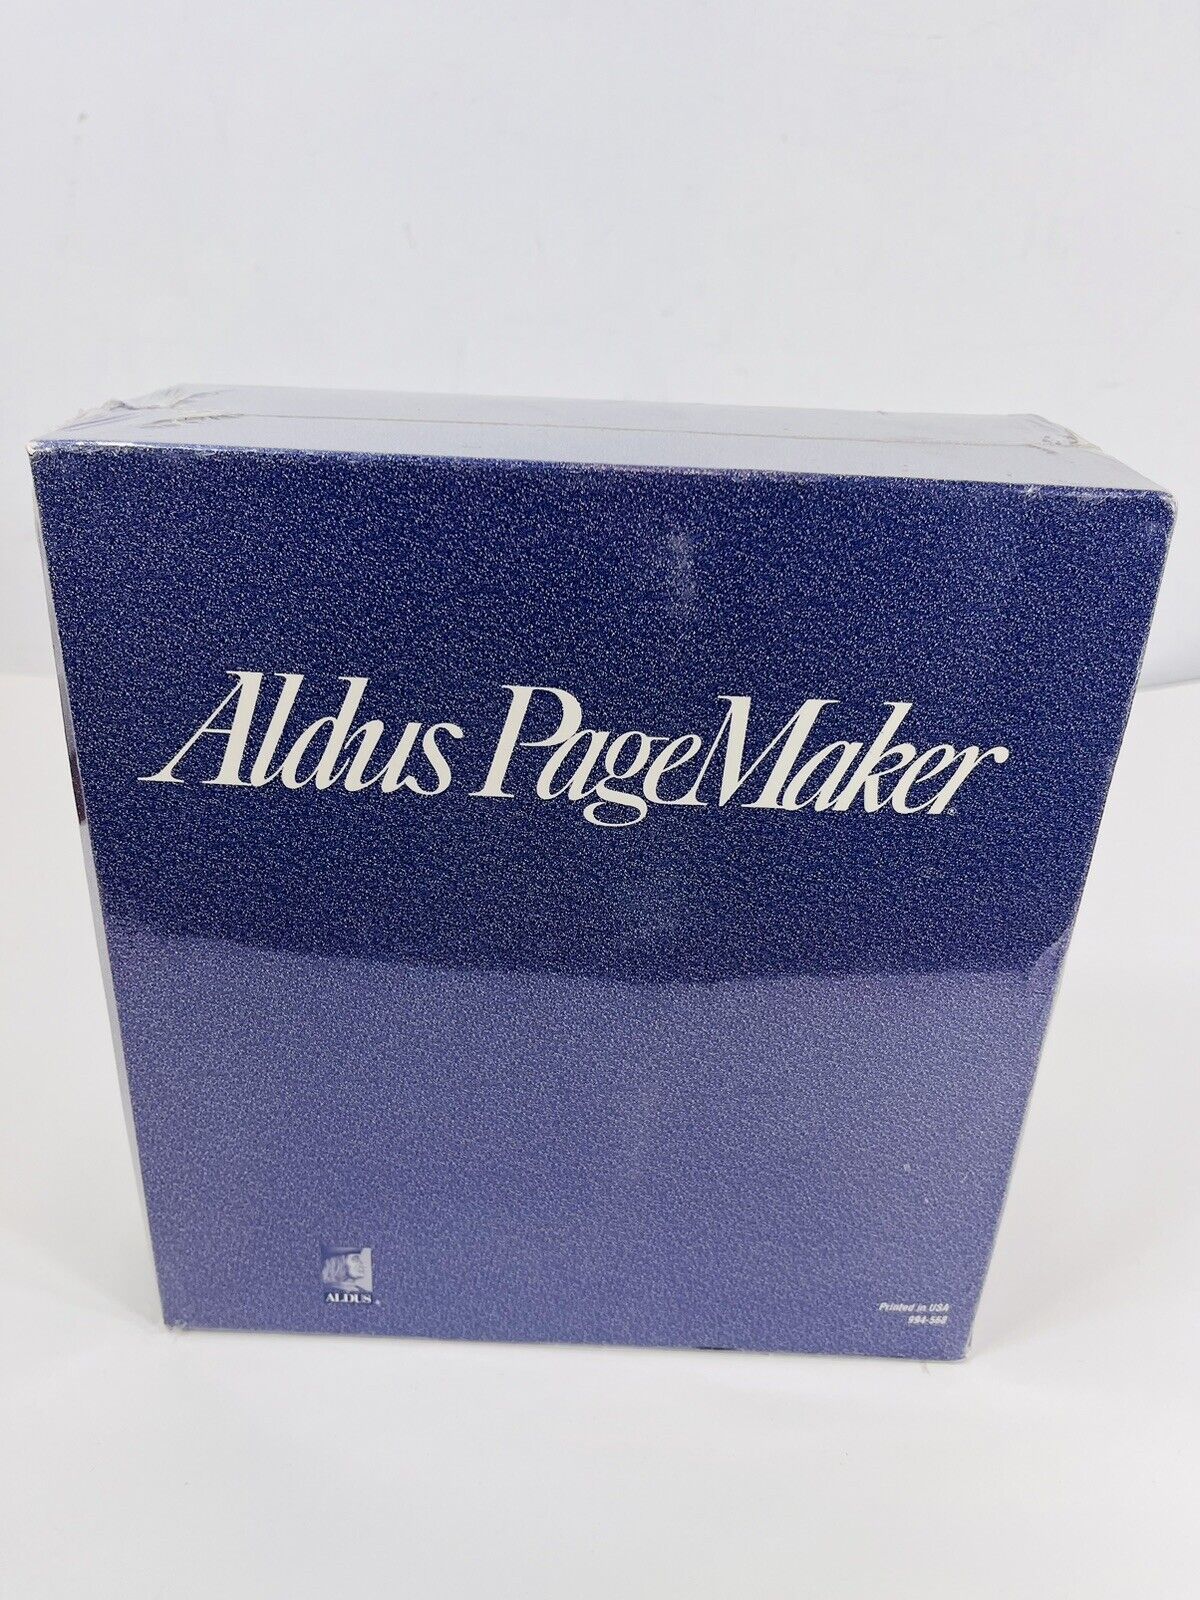 NEW SEALED Aldus PageMaker Version 4.00 For Apple Macintosh 3.5